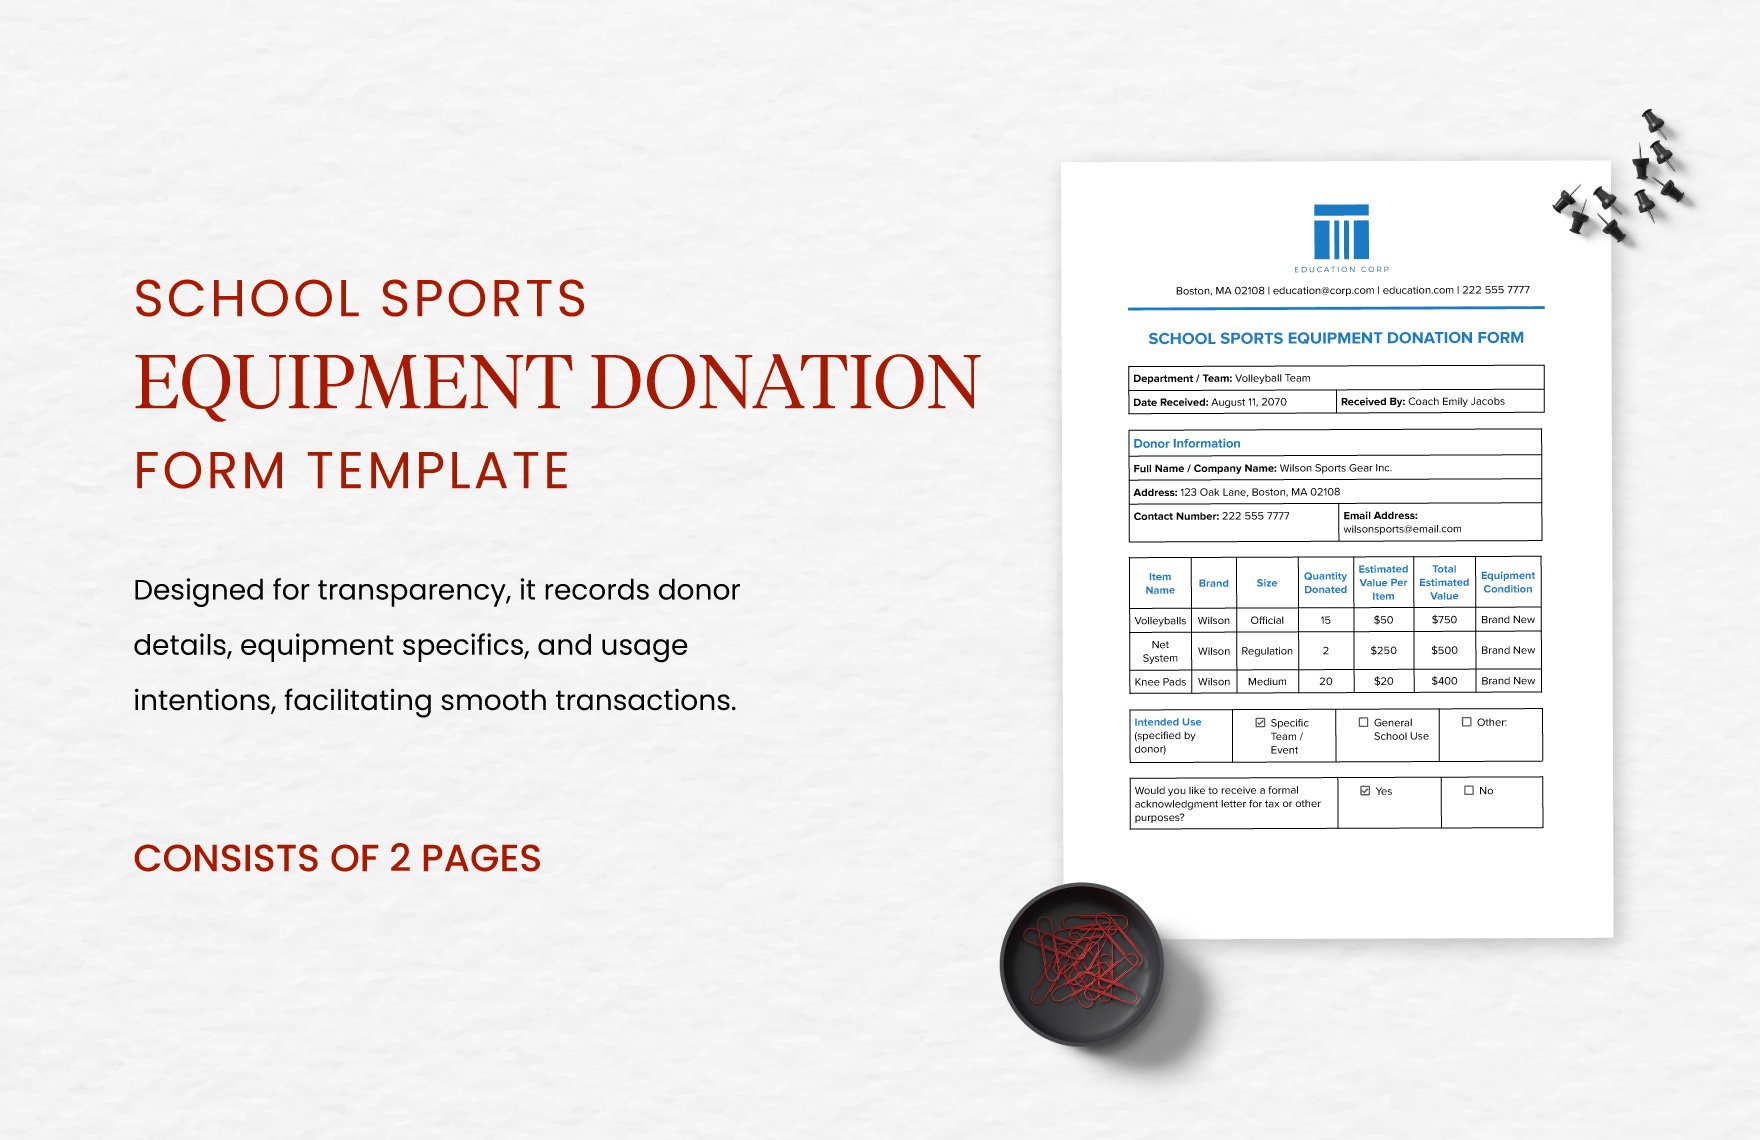 School Sports Equipment Donation Form Template in Word, Google Docs, PDF